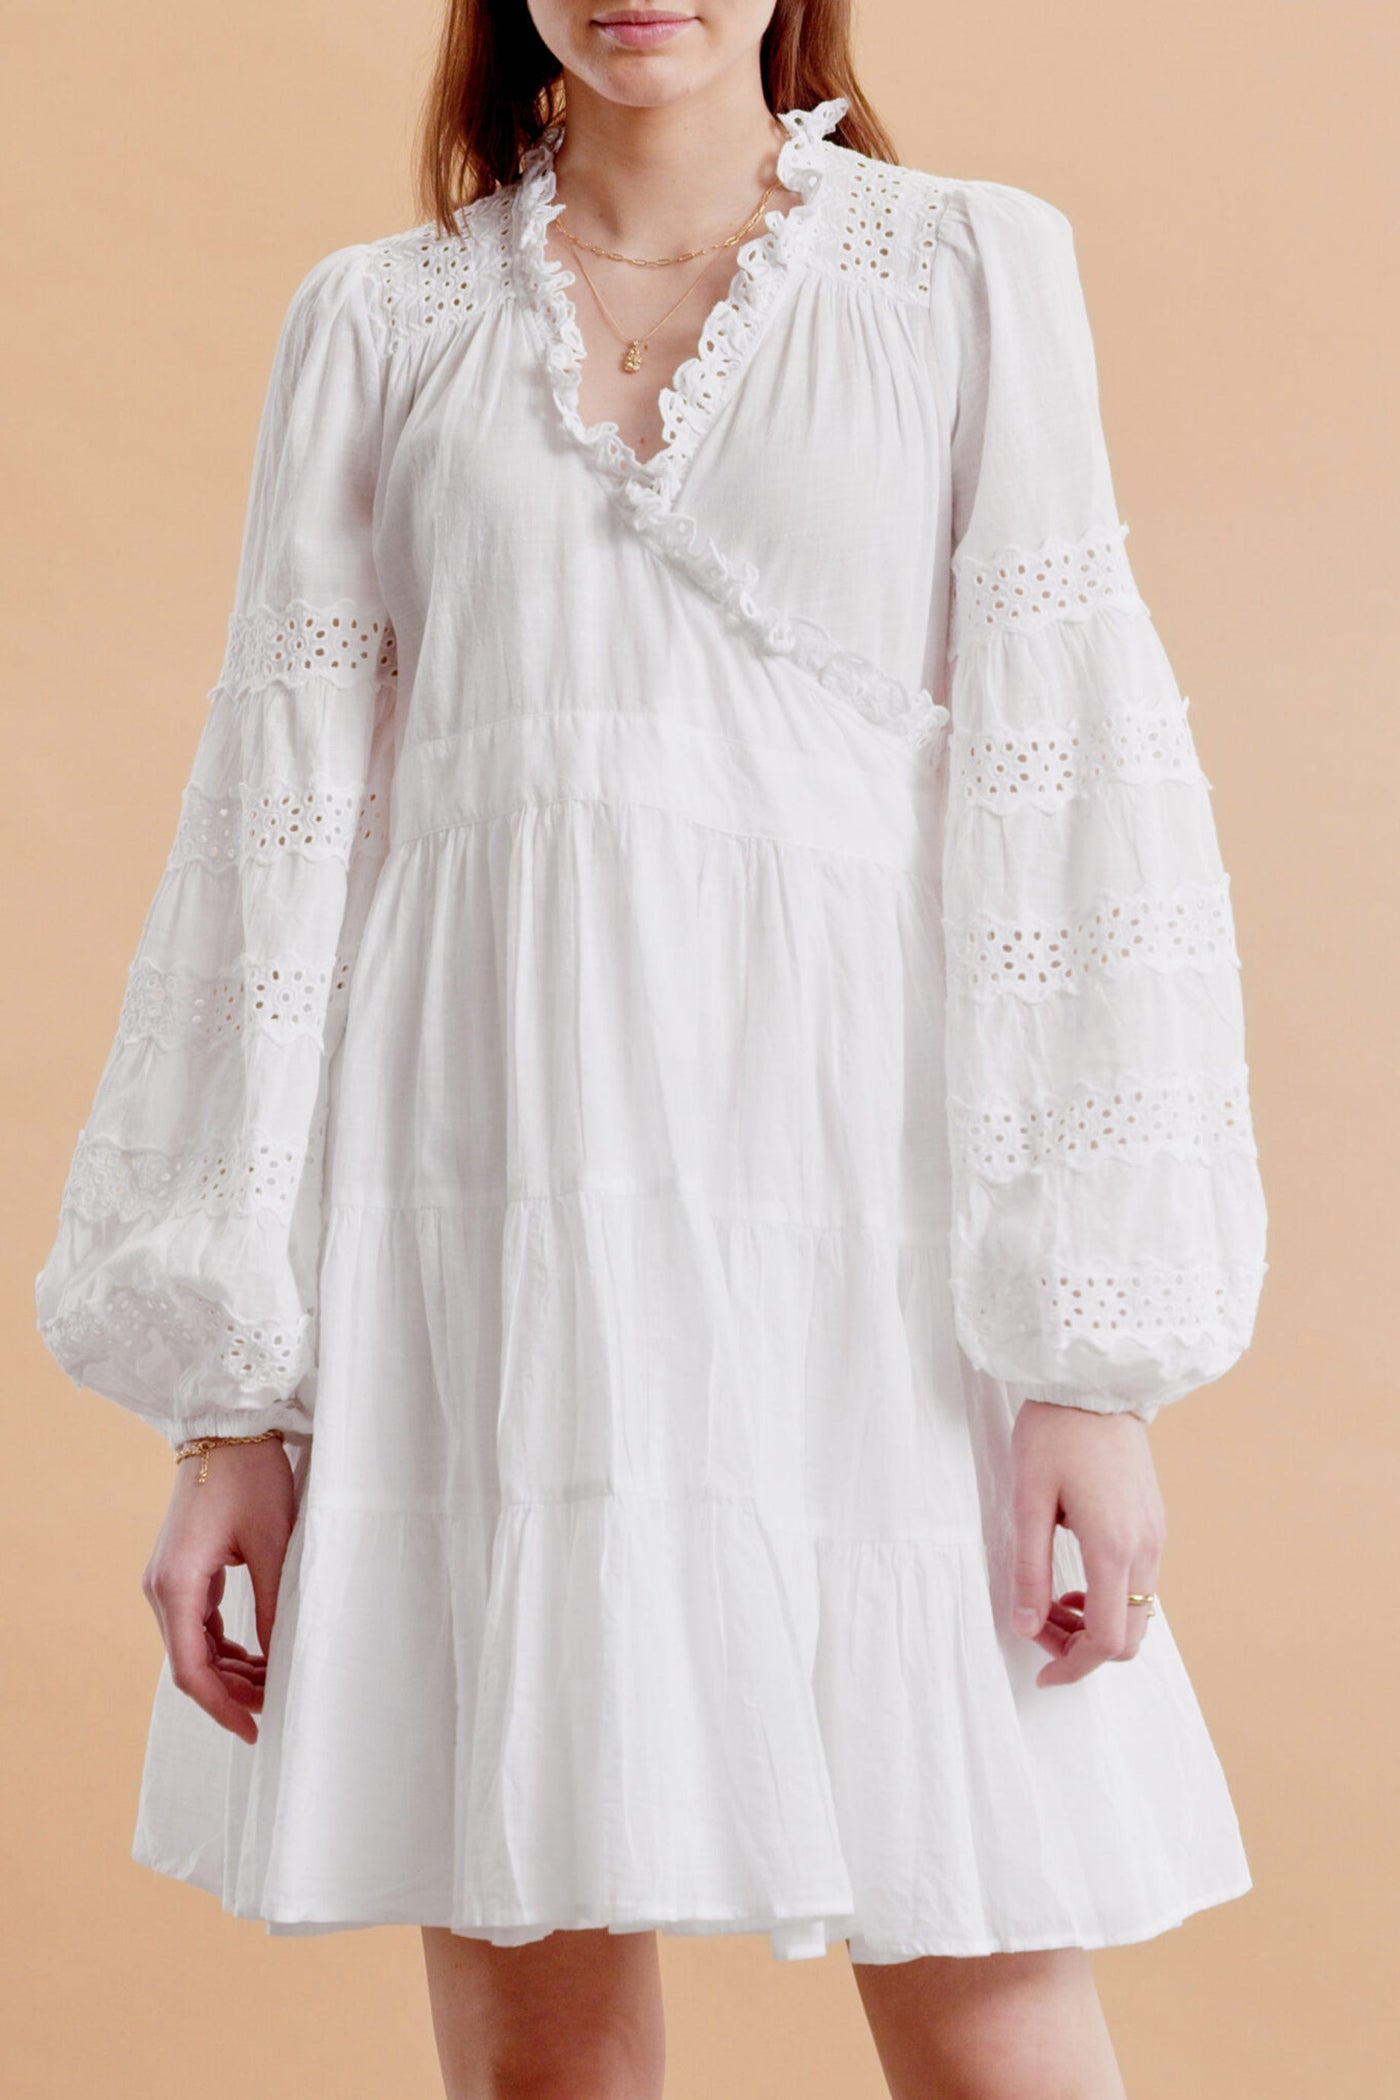 ByTimo Angel Dress - White